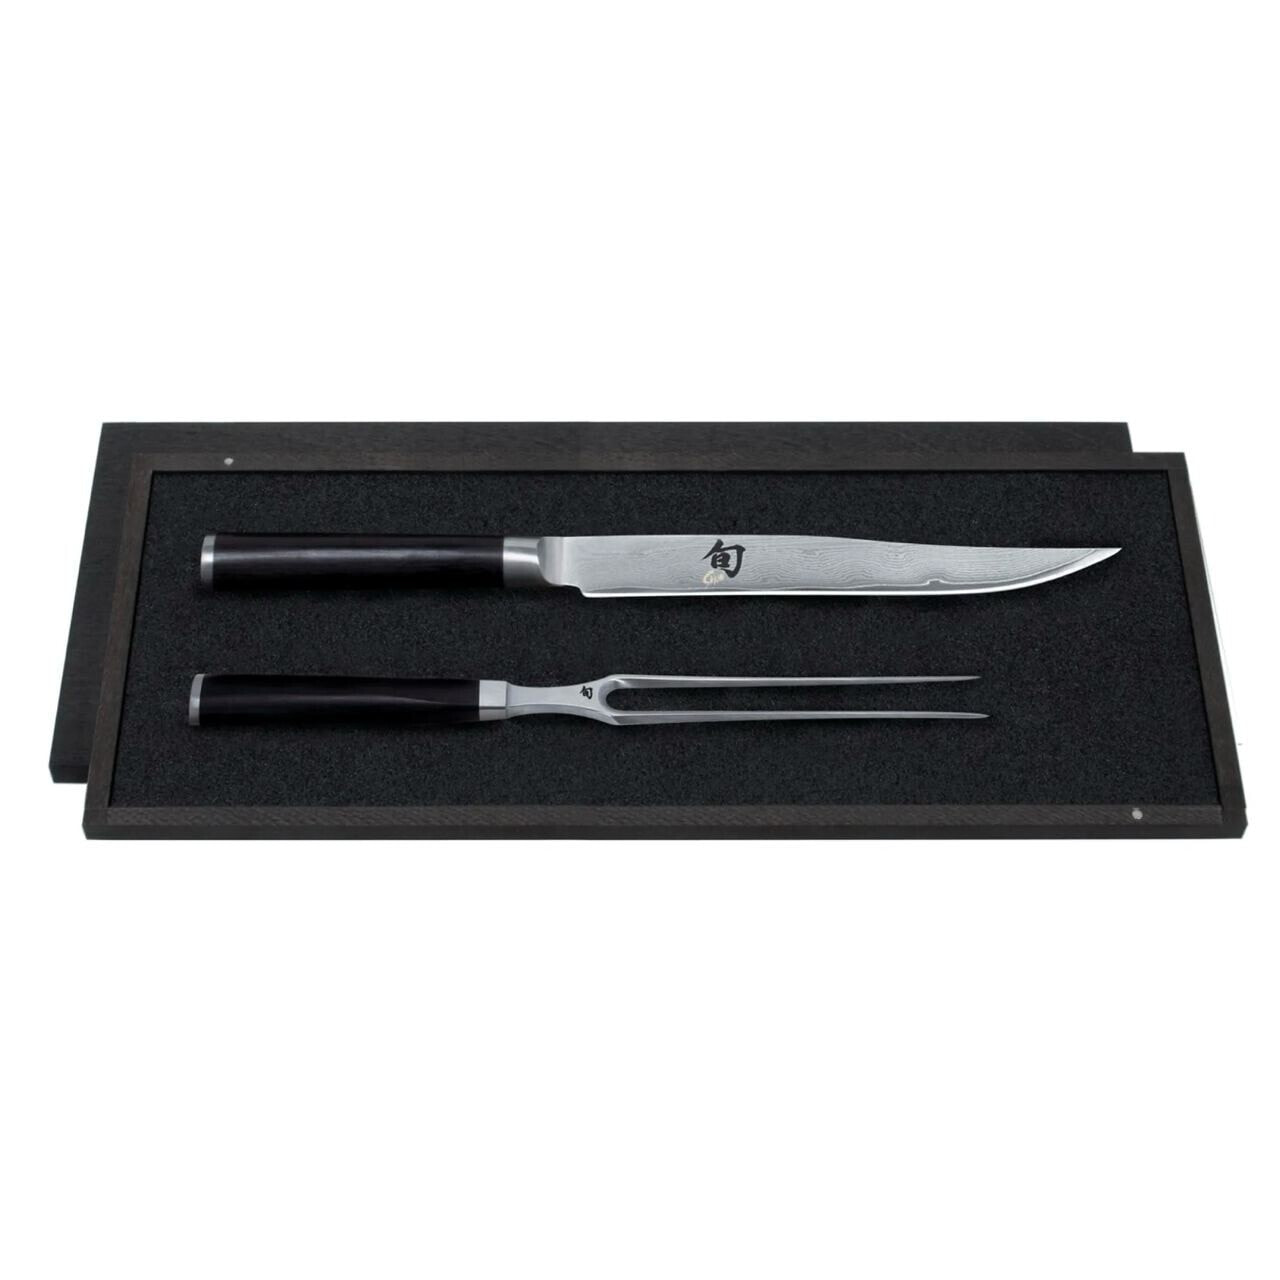 kai Europe kai DMS-200 - Knife/cutlery case set - Steel - Wood - Stainless steel - Black - Japan